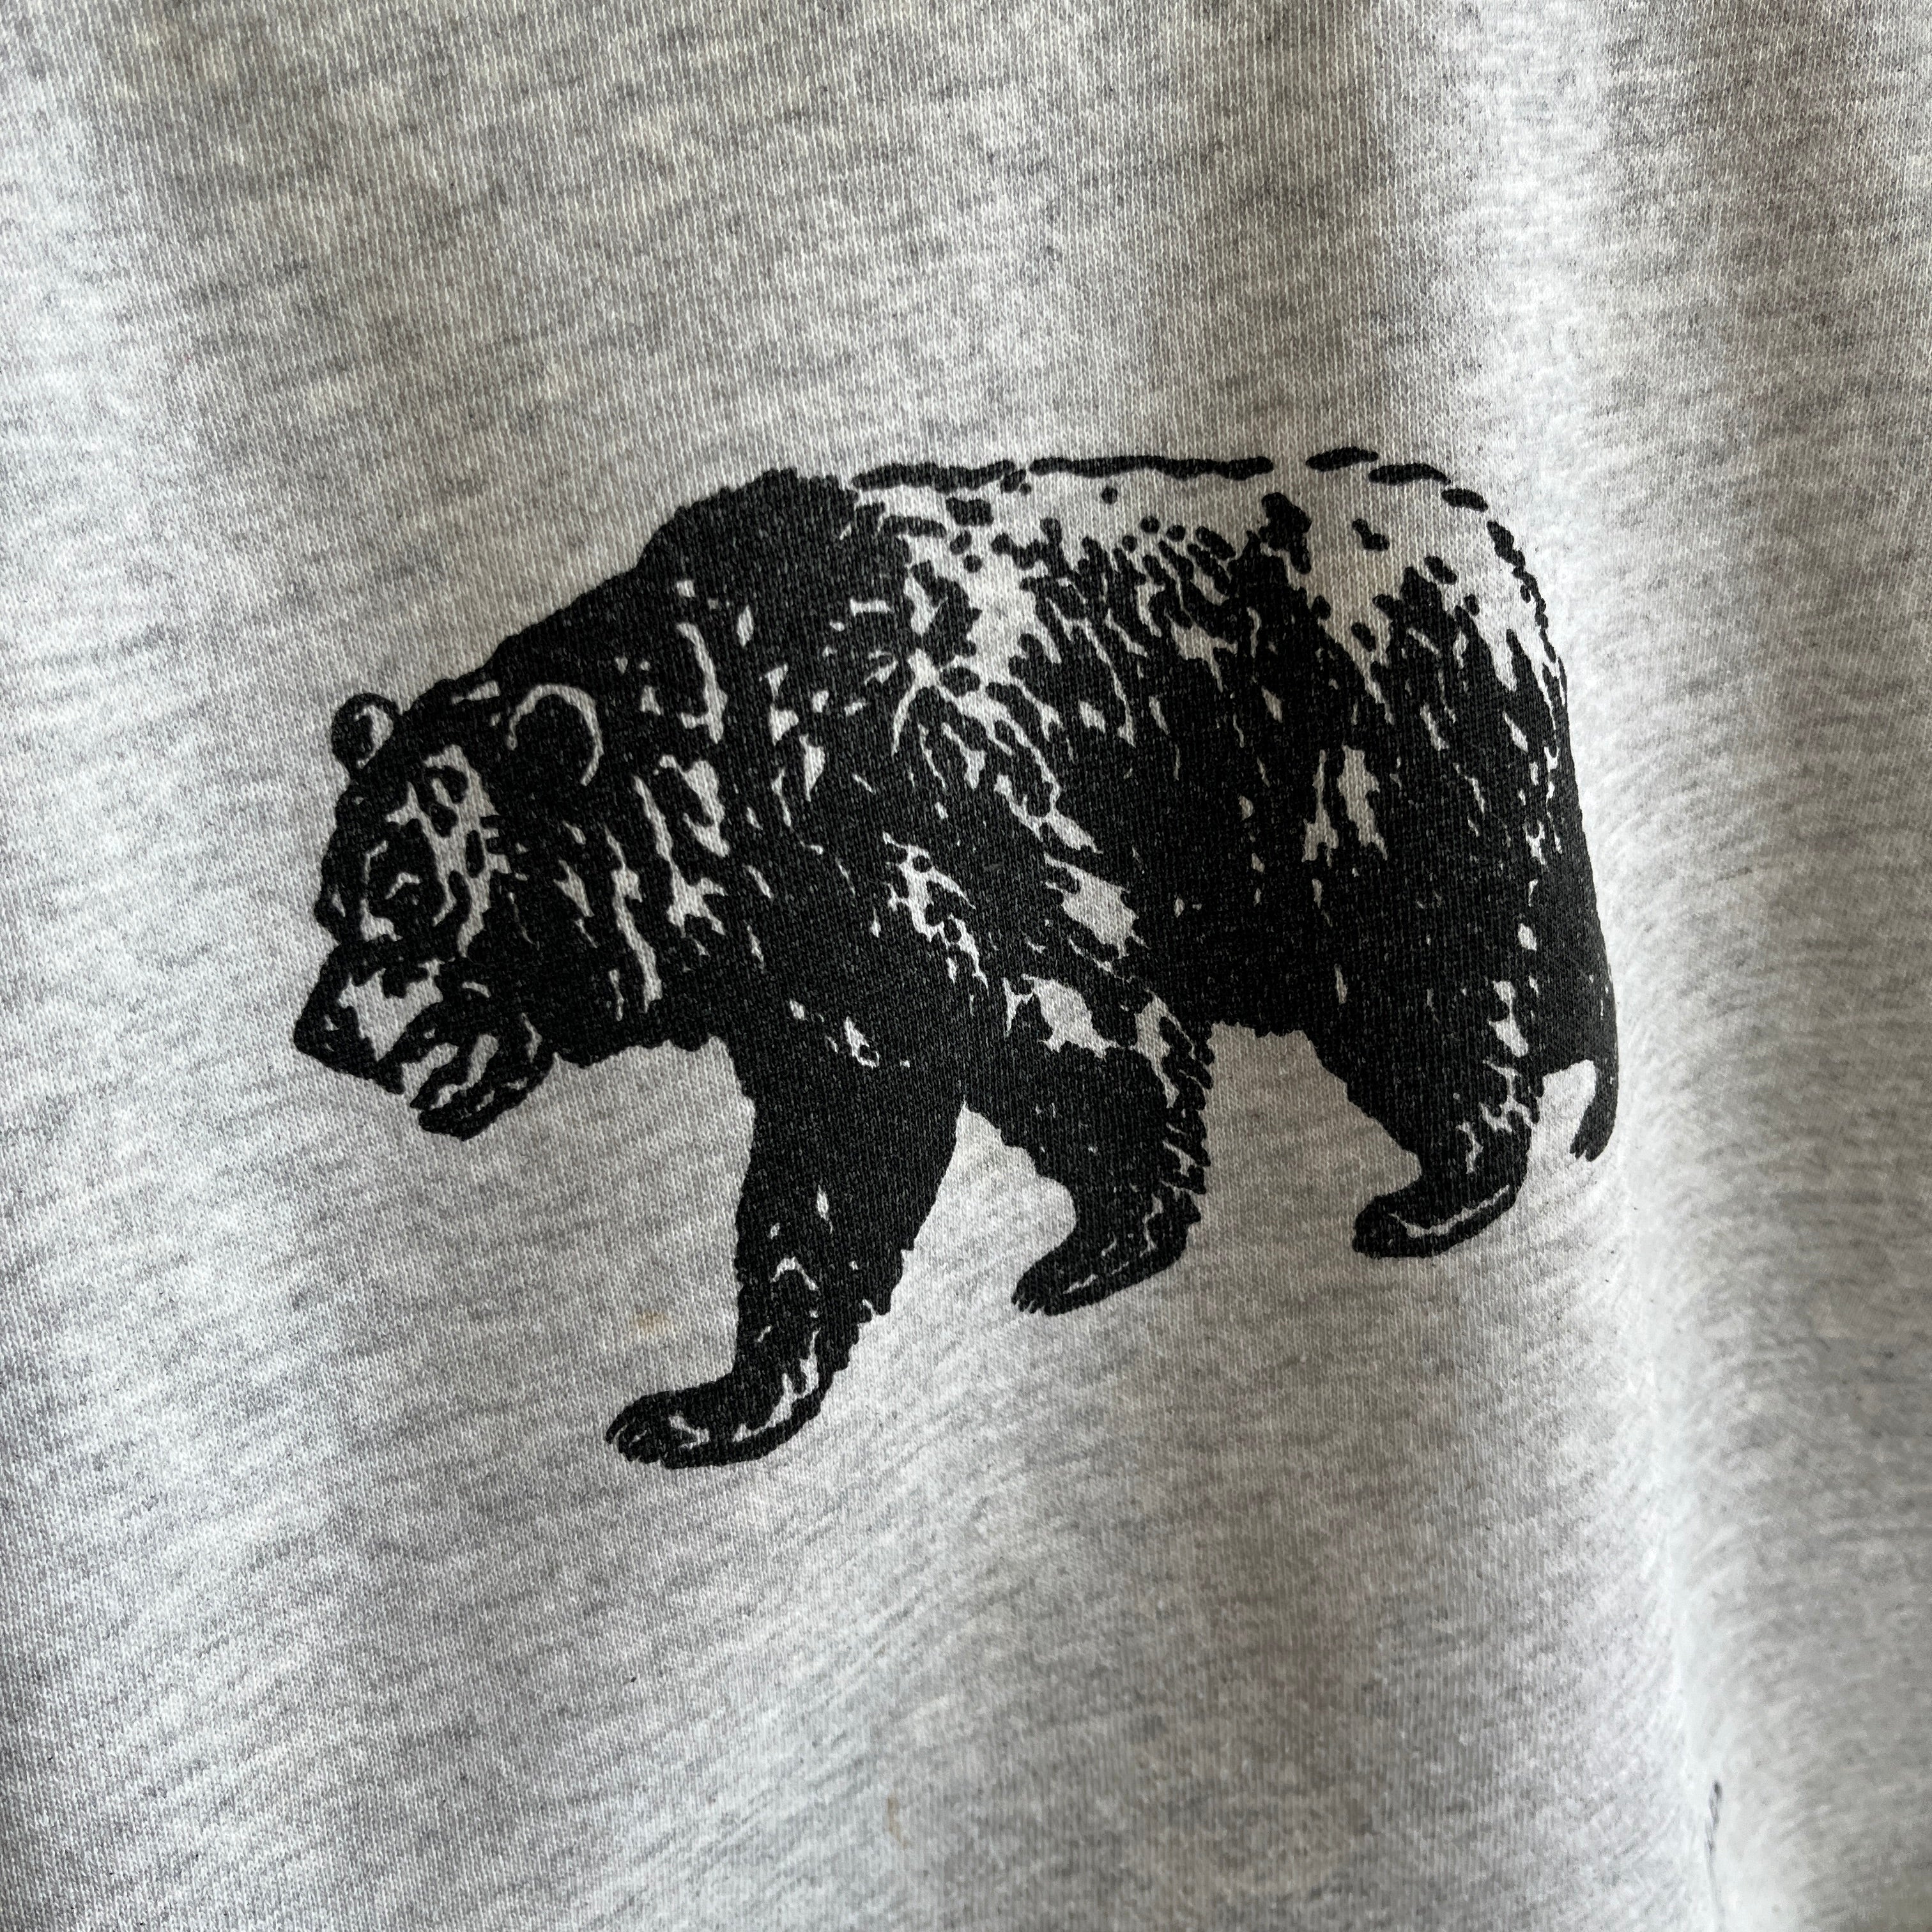 1980s Springfield Science Museum Bear Sweatshirt